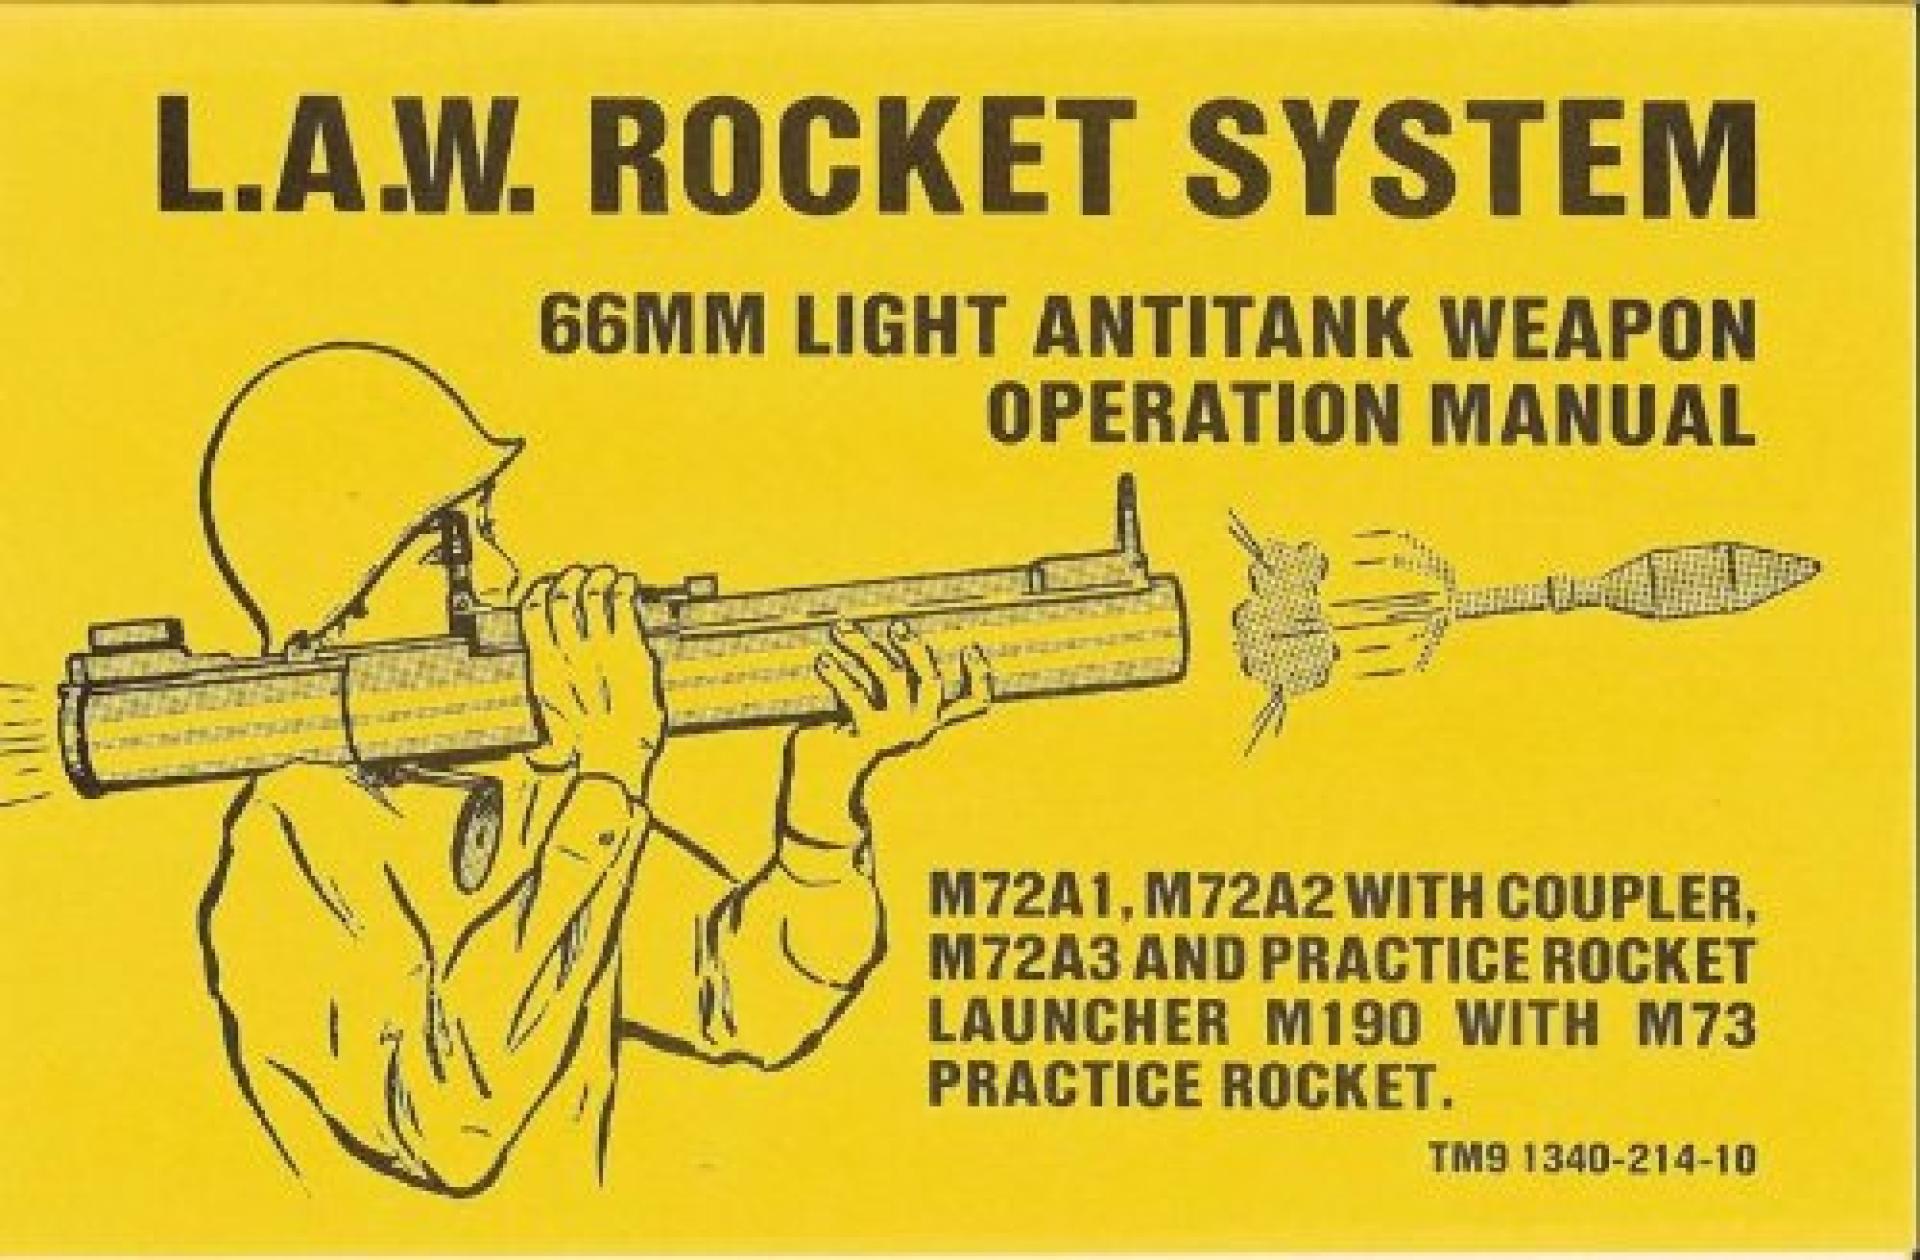 L. A. W. Rocket System - 66MM Light Antitank Weapon Operation Manual